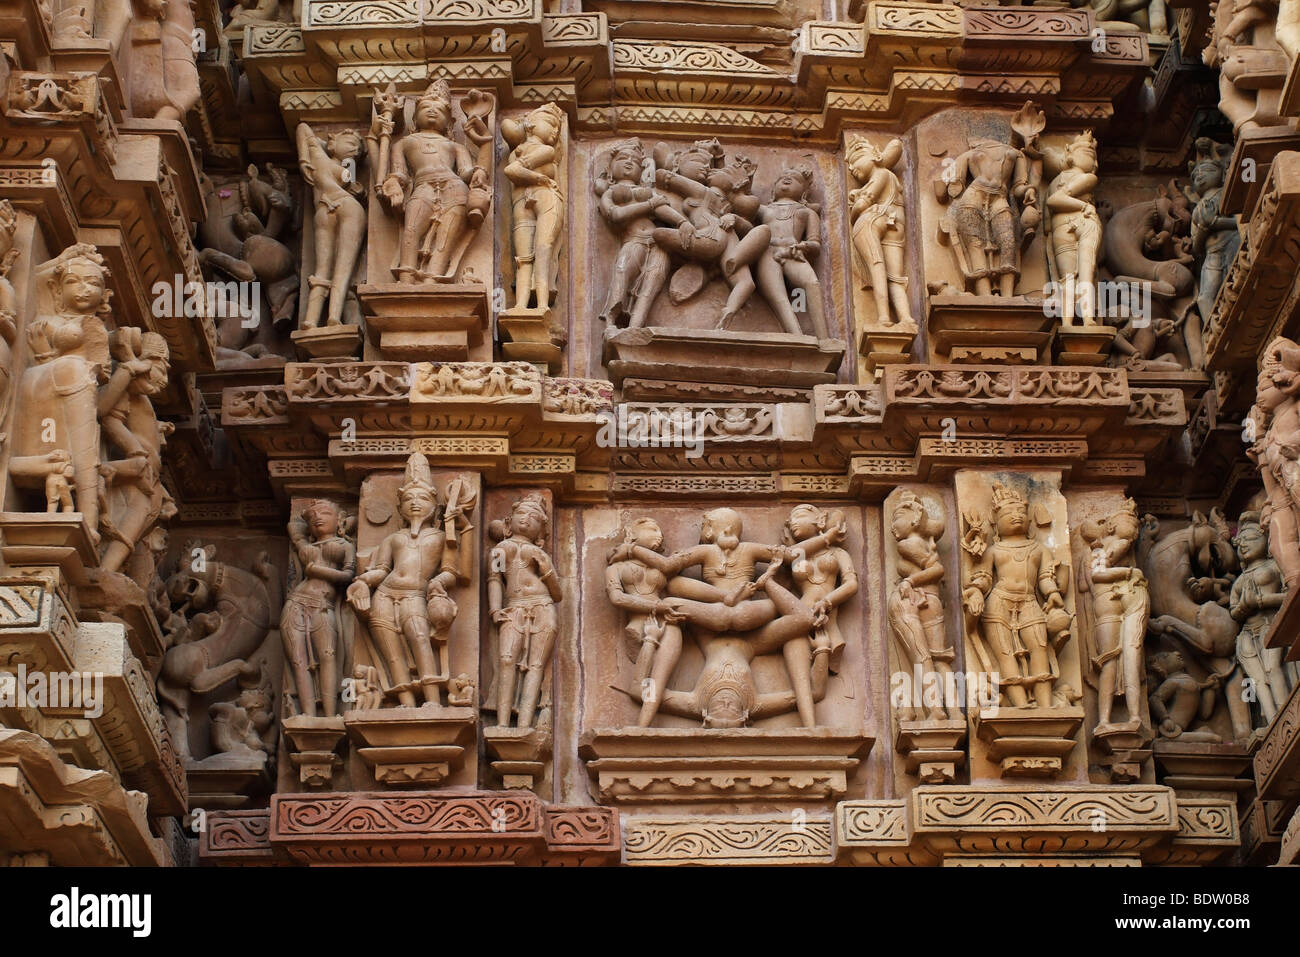 Tempel von Khajuraho, Indien, Tempel in Indien, Stockfoto